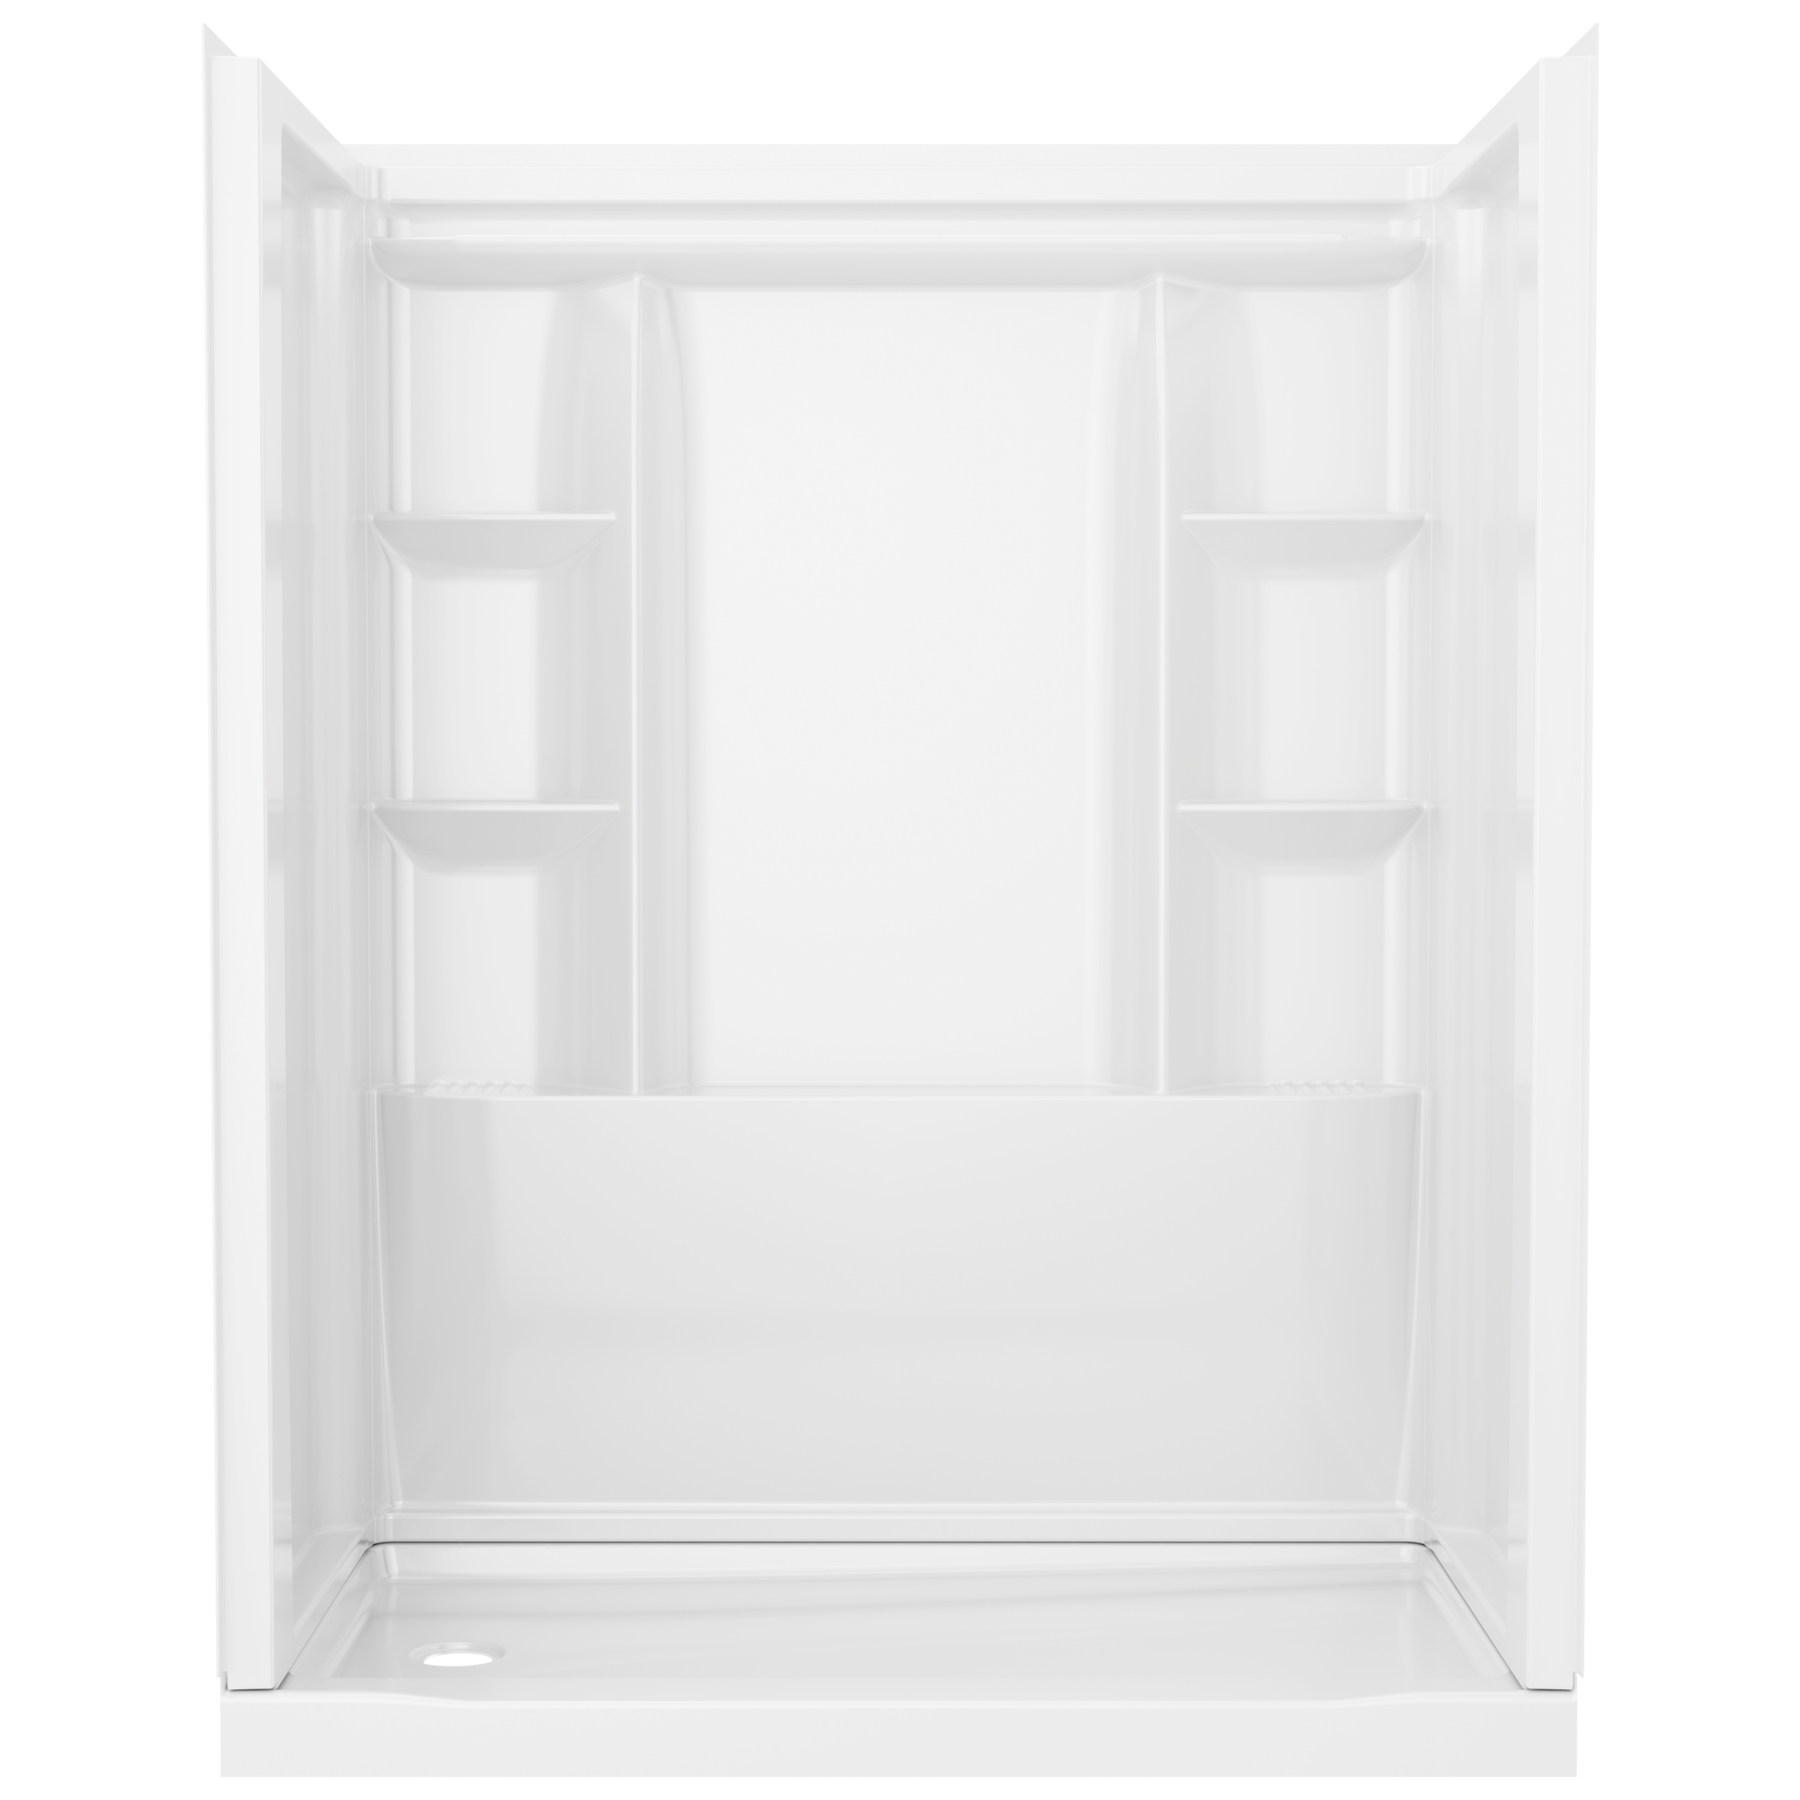 Buy Online, Adhesive Shelf Wall Mounted White Storage Manufacturer